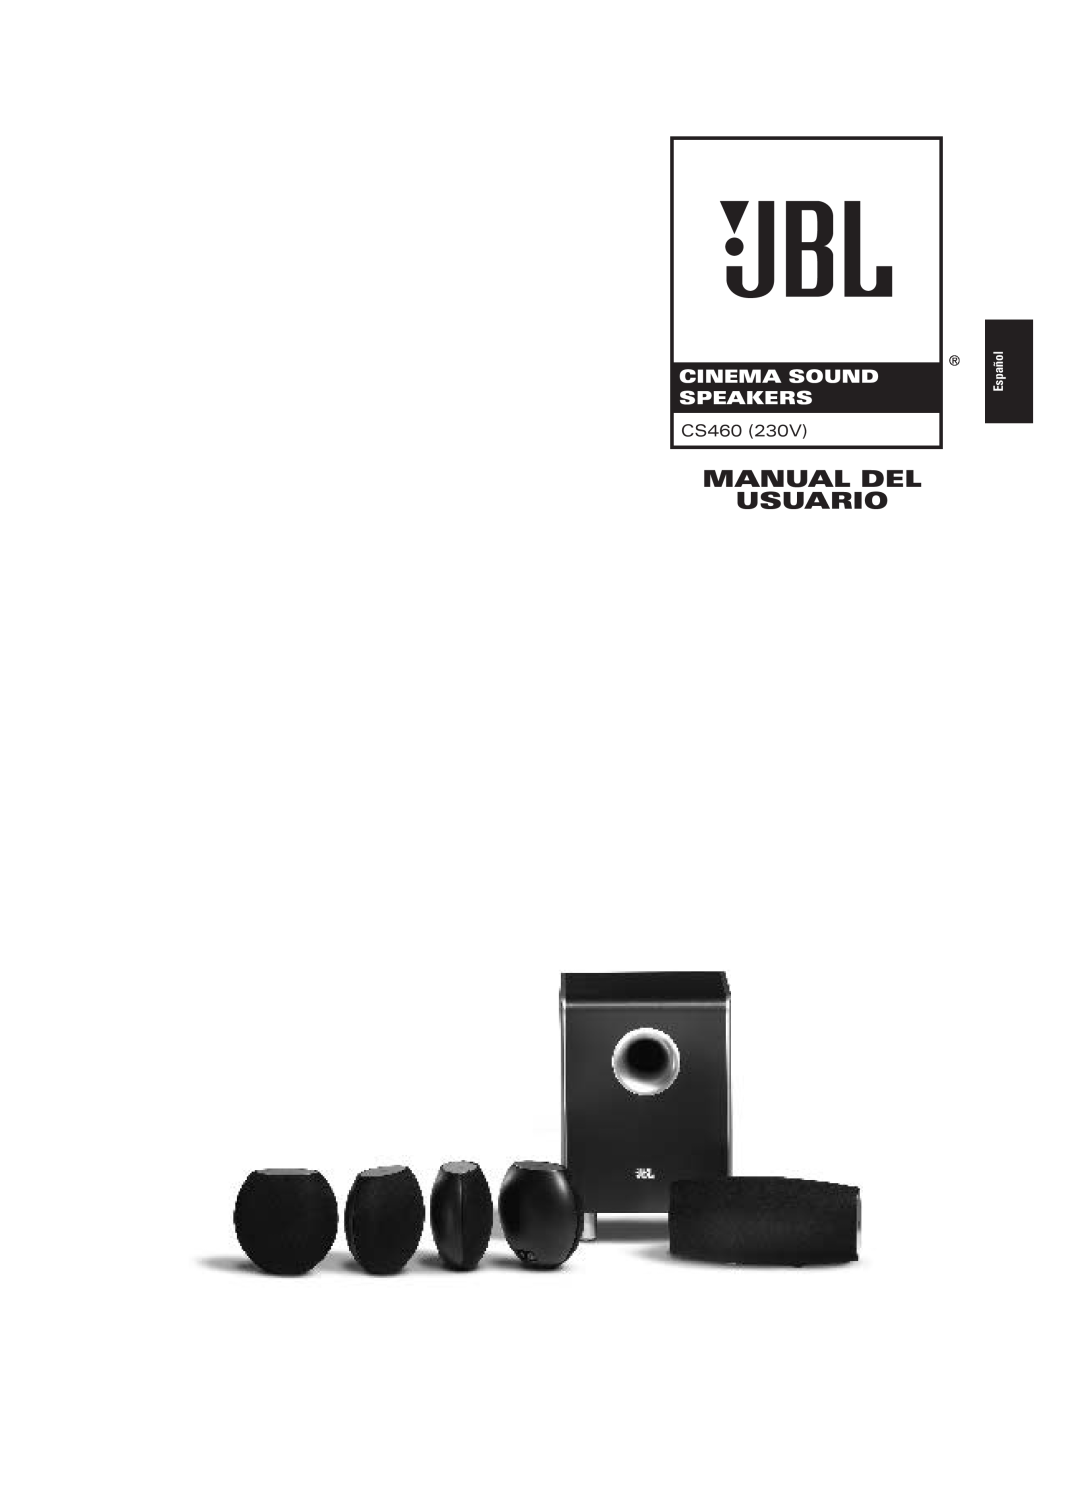 JBL CS460 (230V) manual Manual Del Usuario, Cinema Sound Speakers, Español 